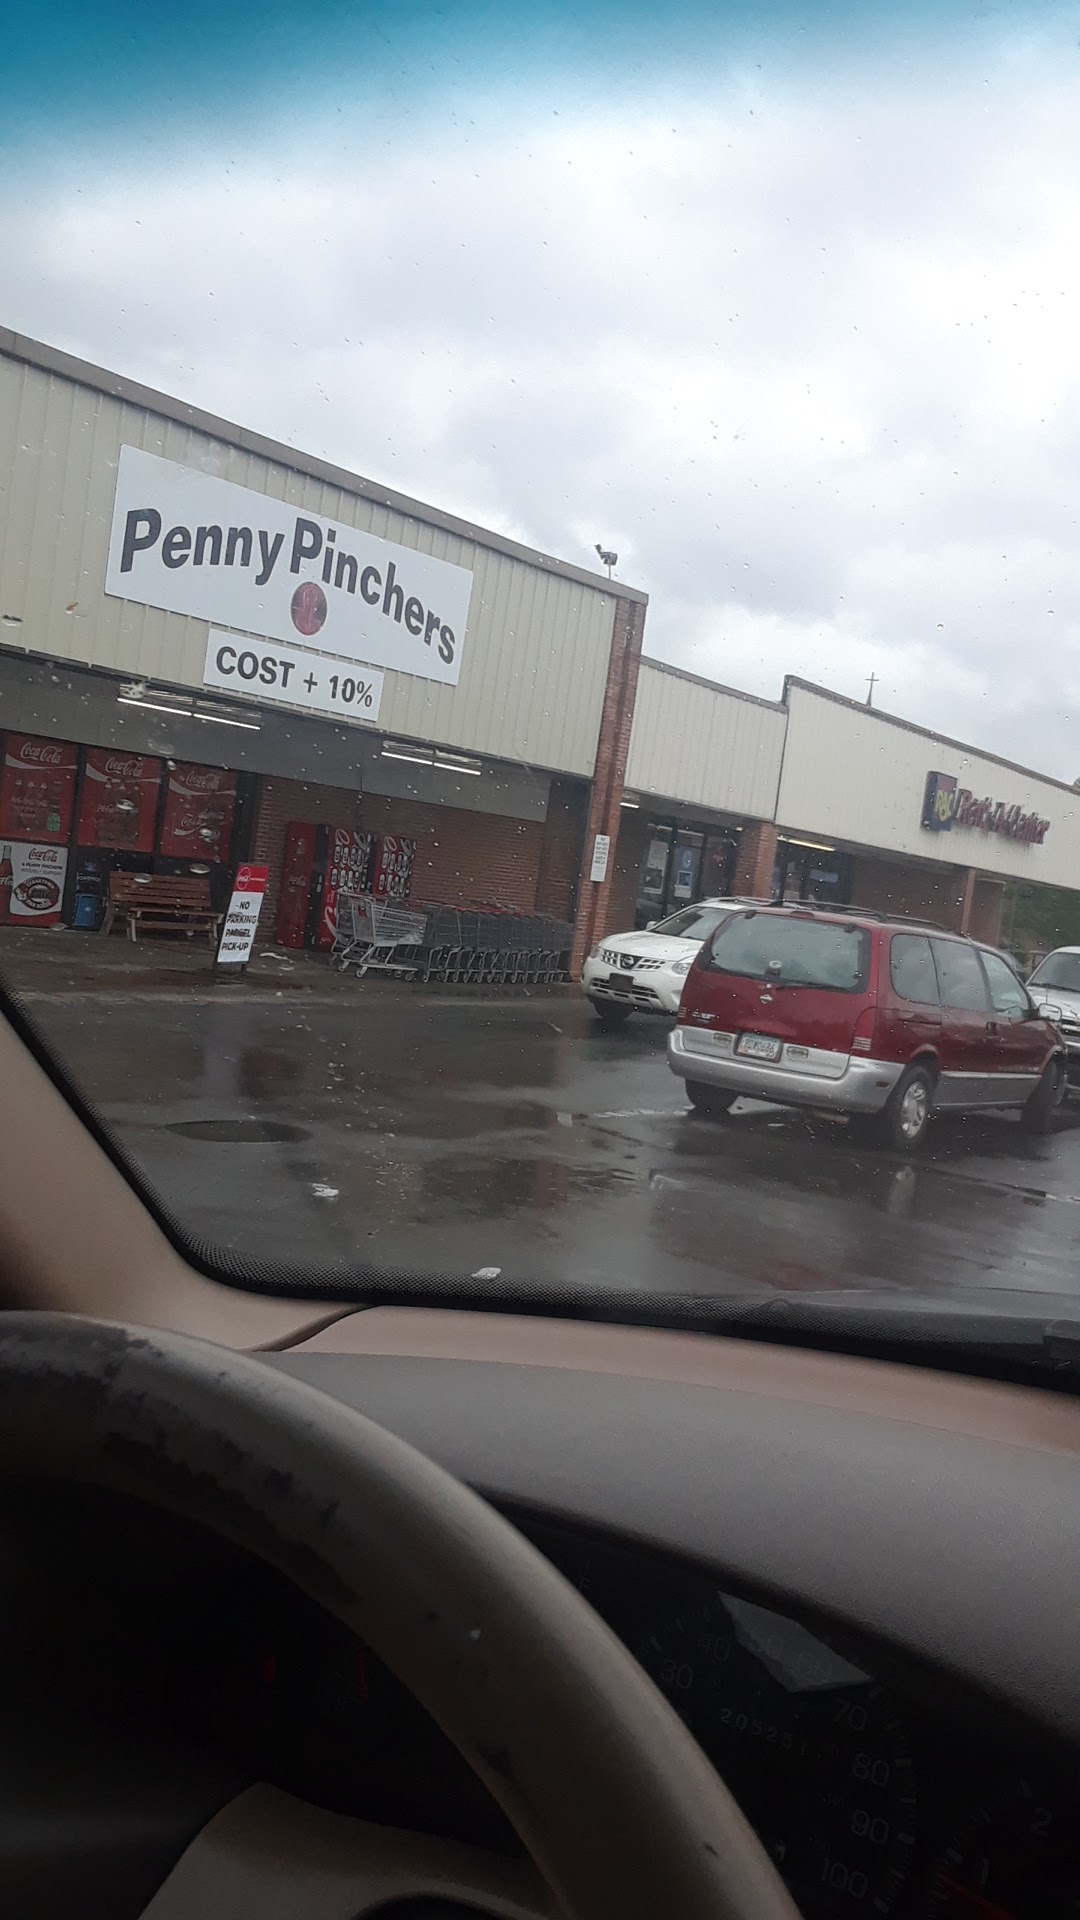 Penny Pinchers